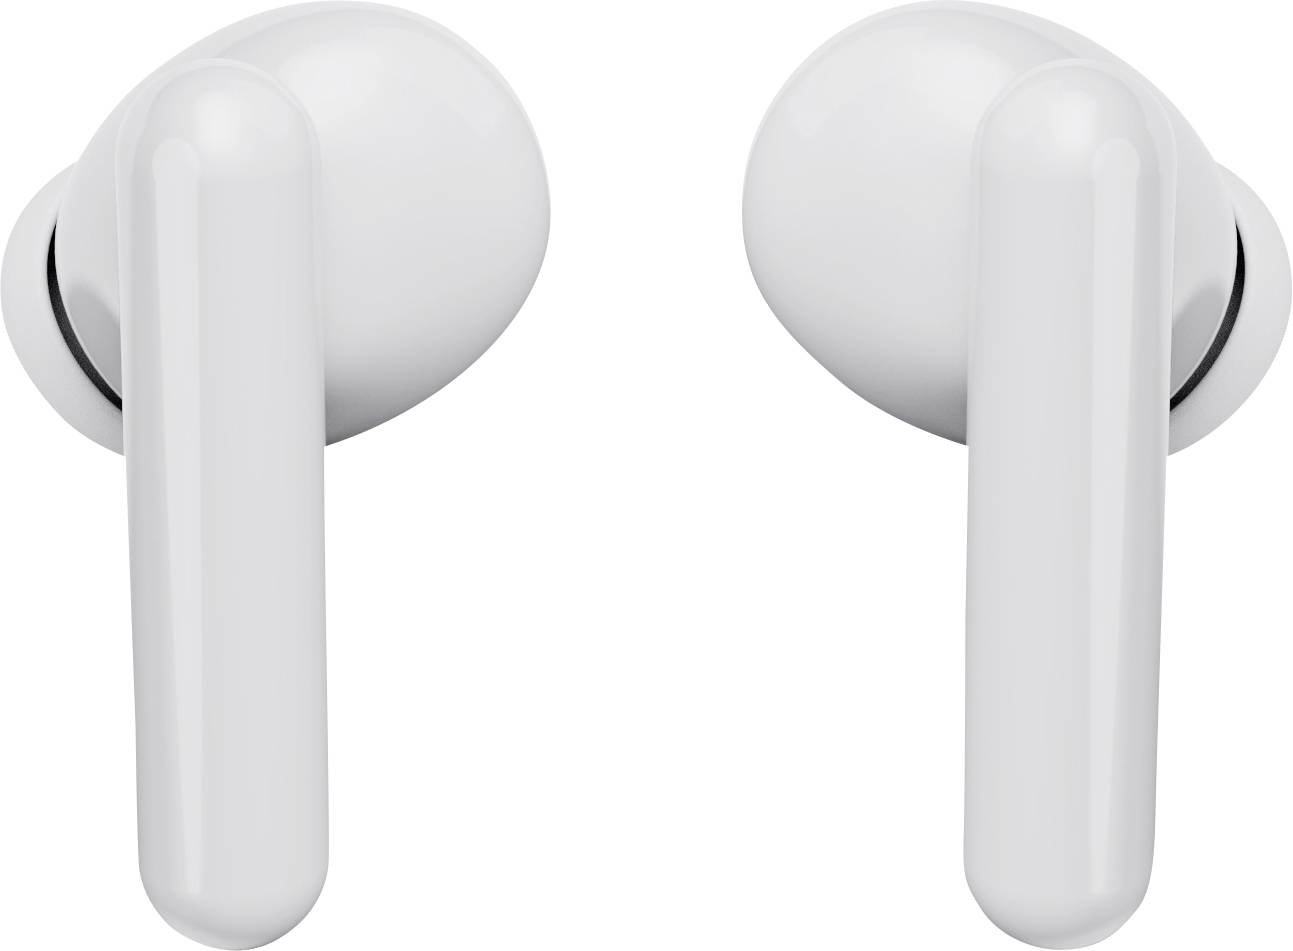 Isolator Sitcom Gooi Denver TWE-38 In-ear headphones Bluetooth® (1075101) White | Conrad.com